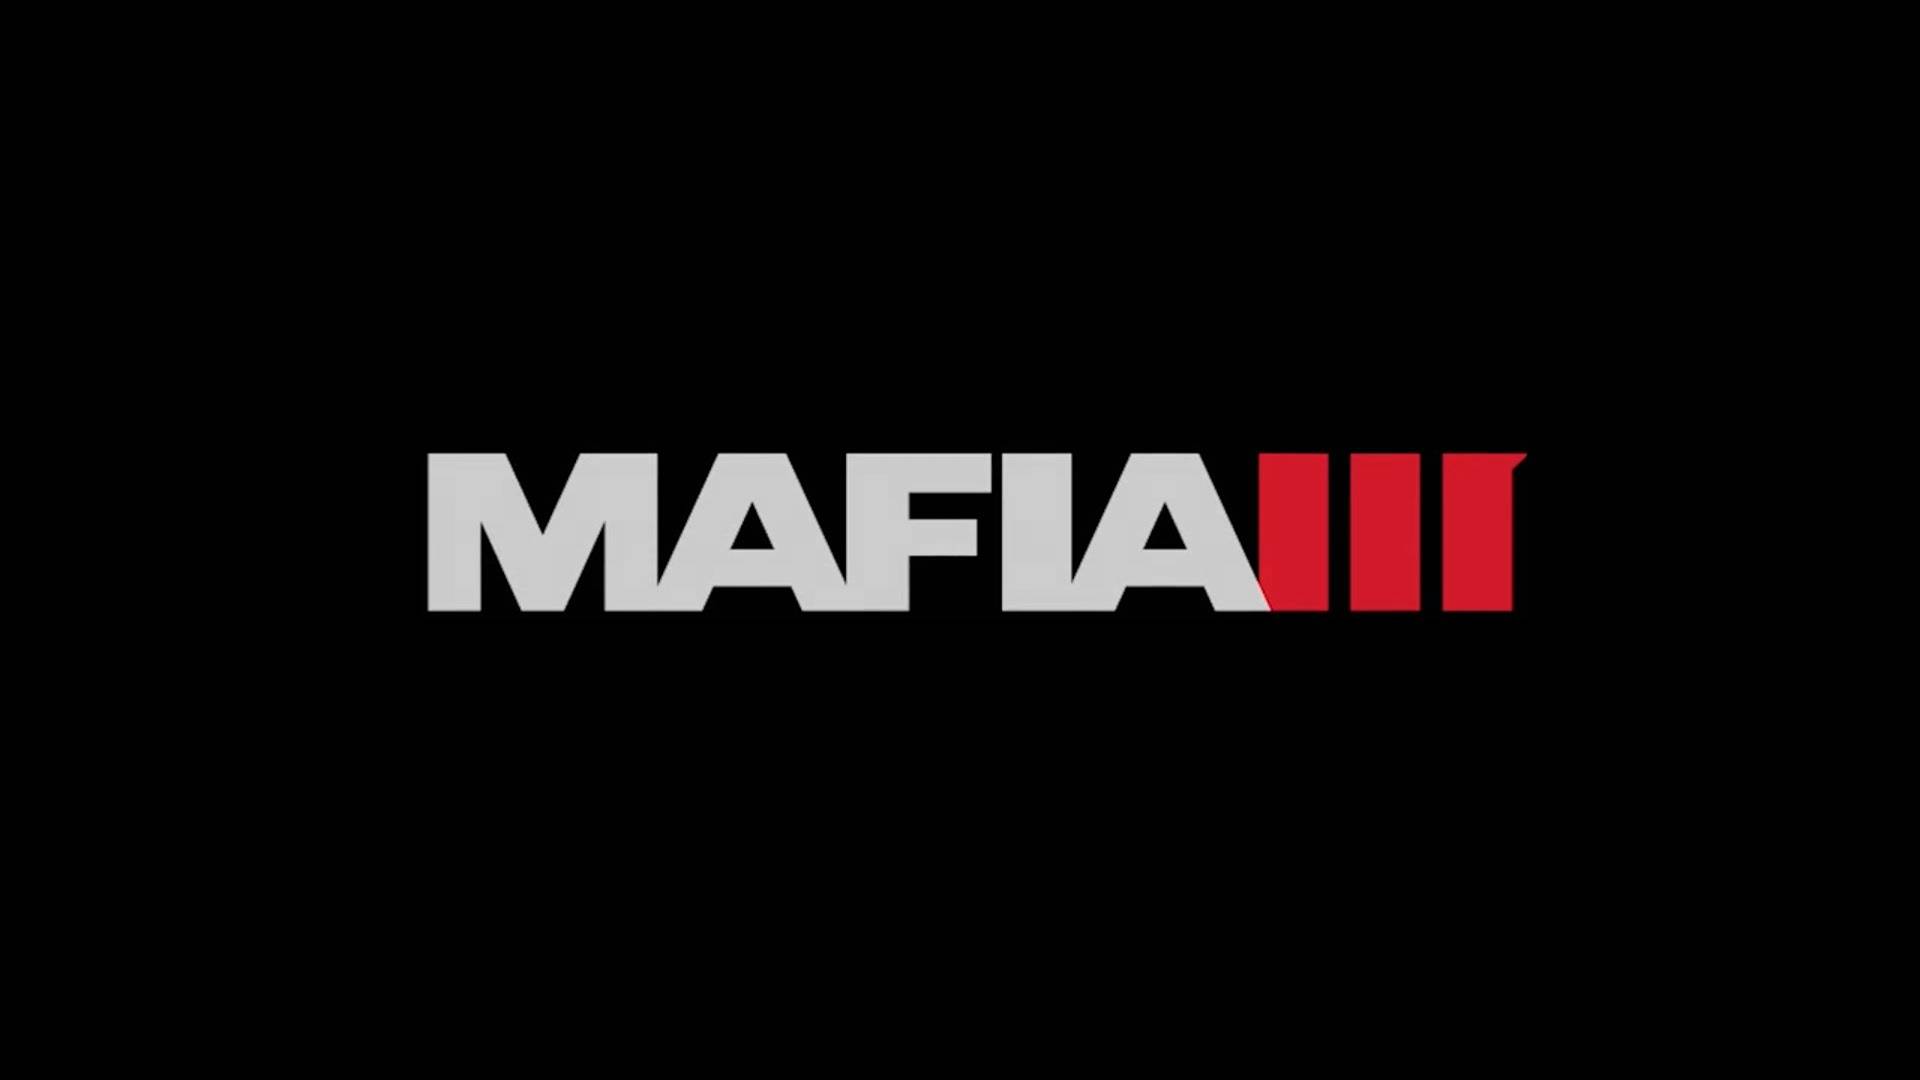 Mafia Iii HD Wallpaper Background Image